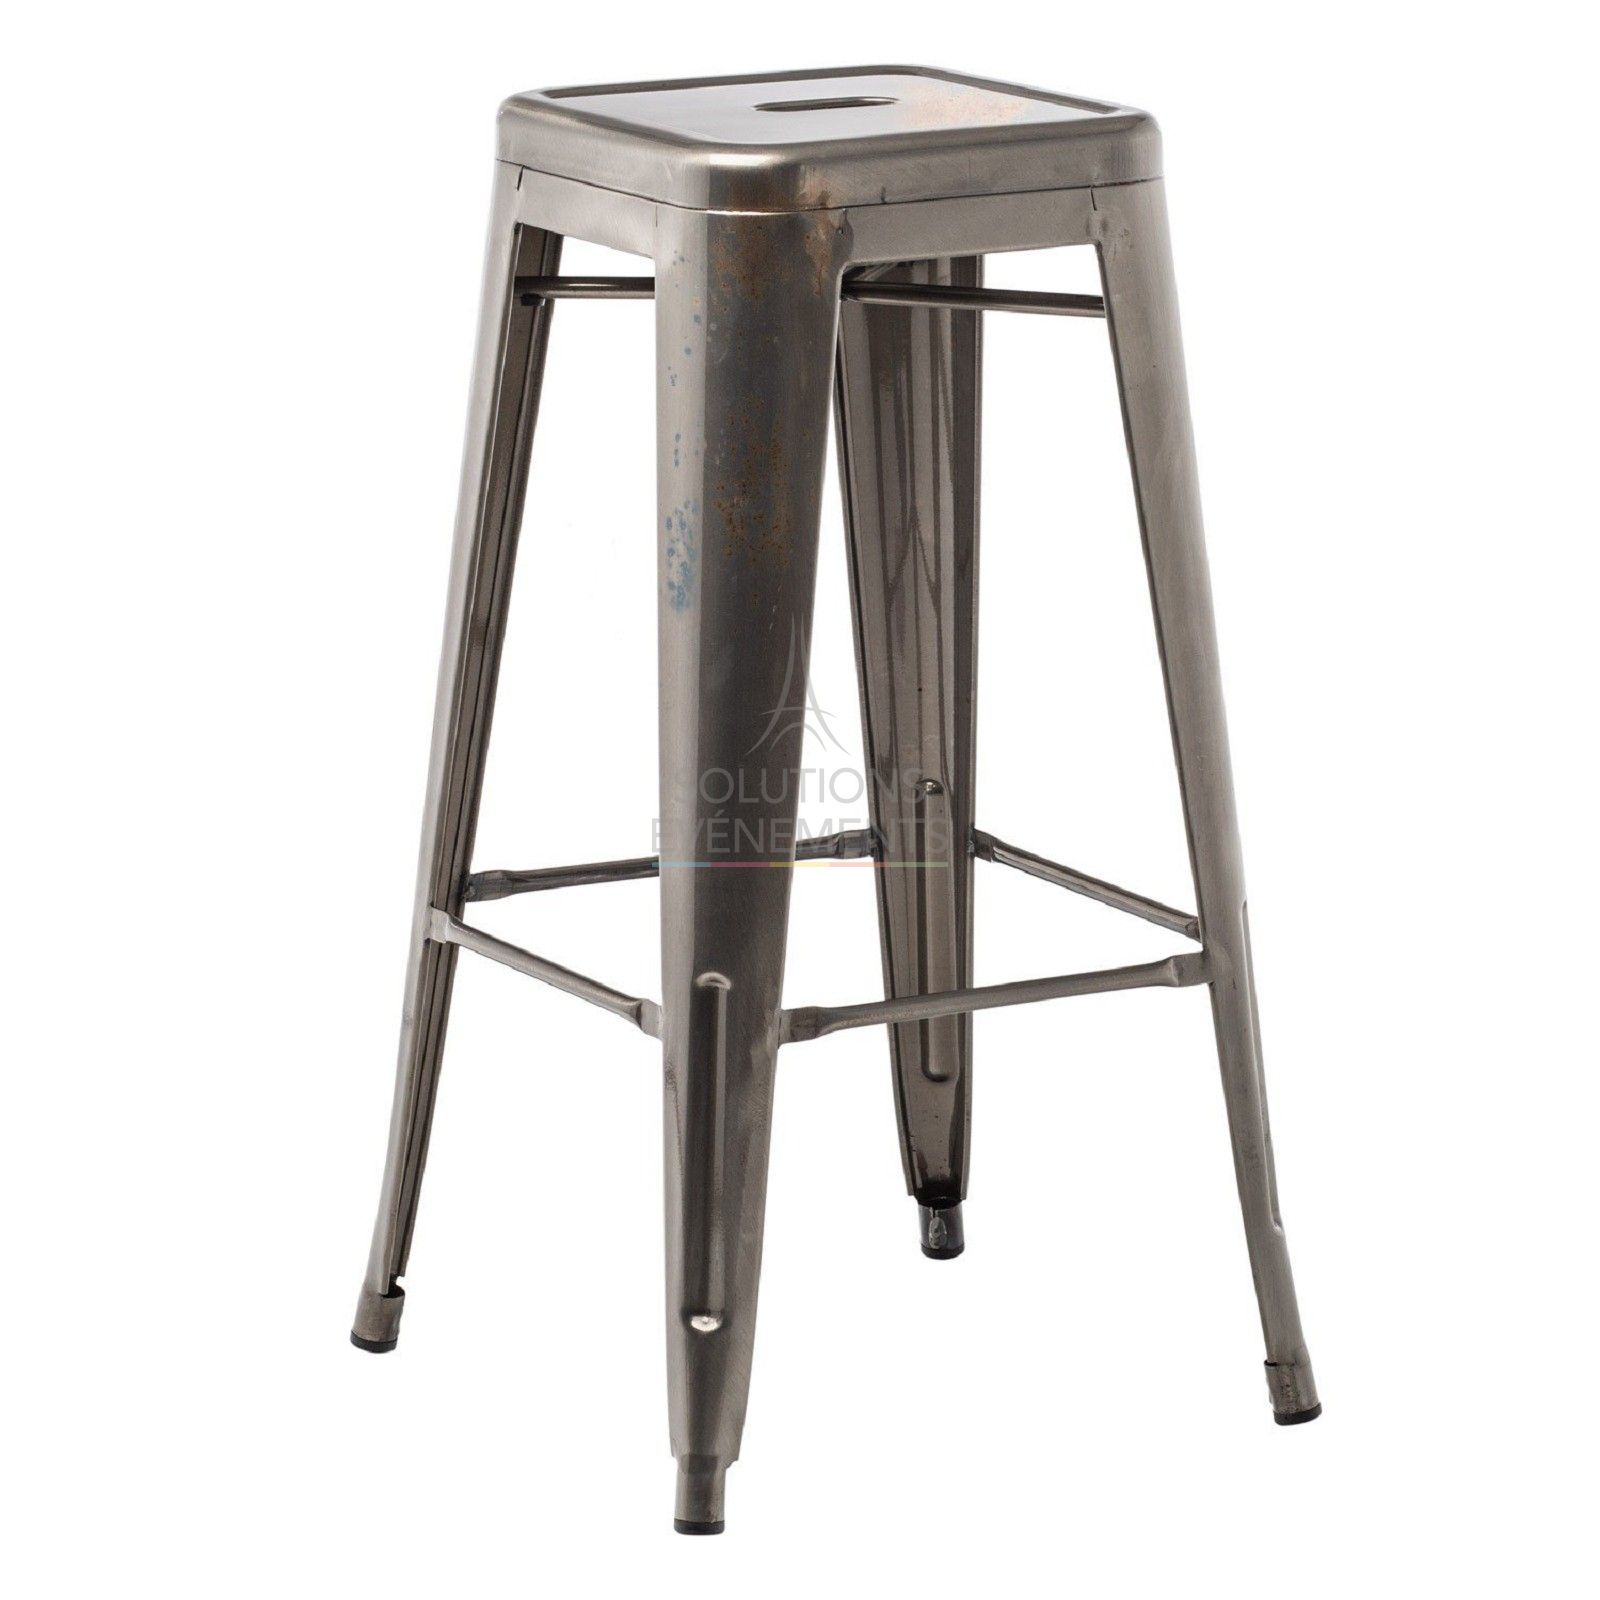 Industrial style high stool rental